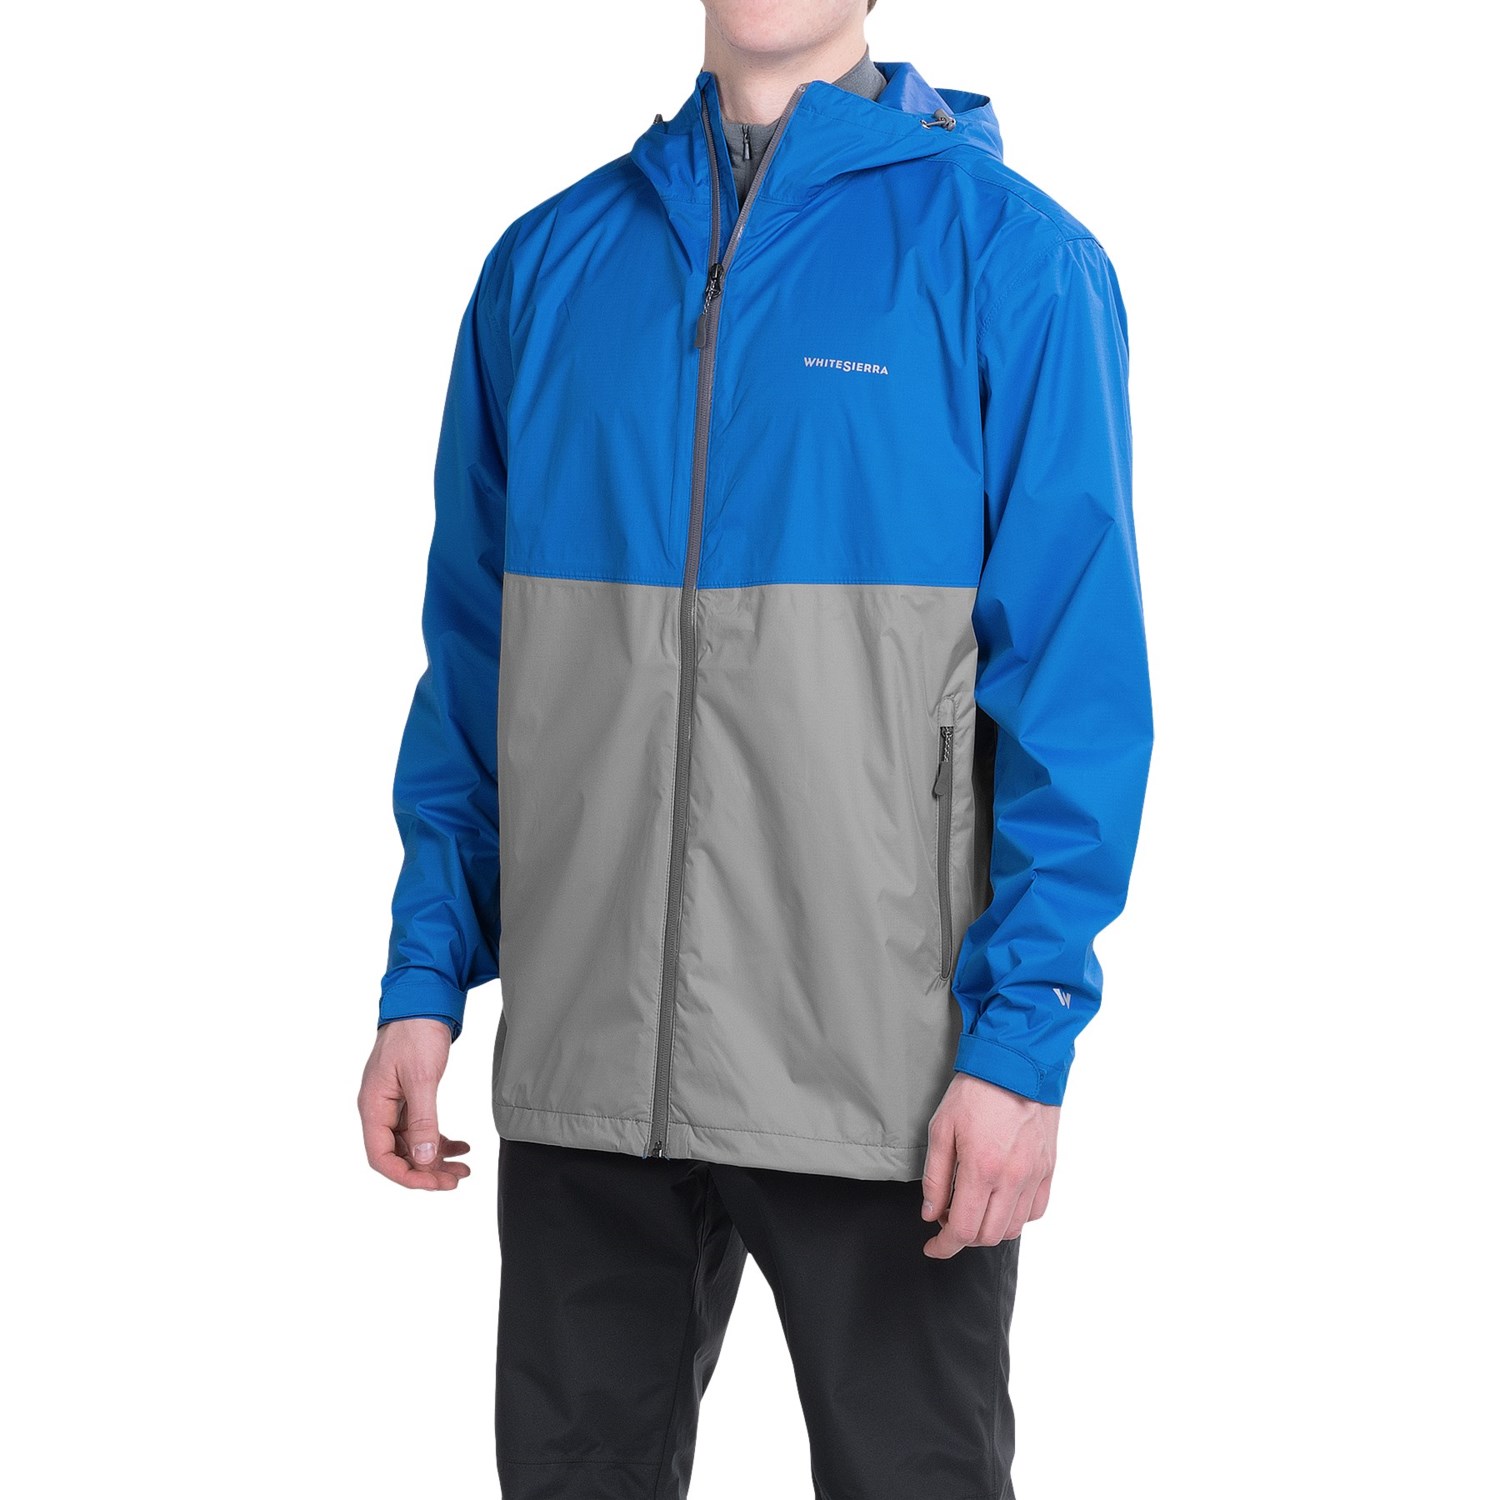 White Sierra Trabagon Rain Jacket (For Men) 9853M - Save 72%